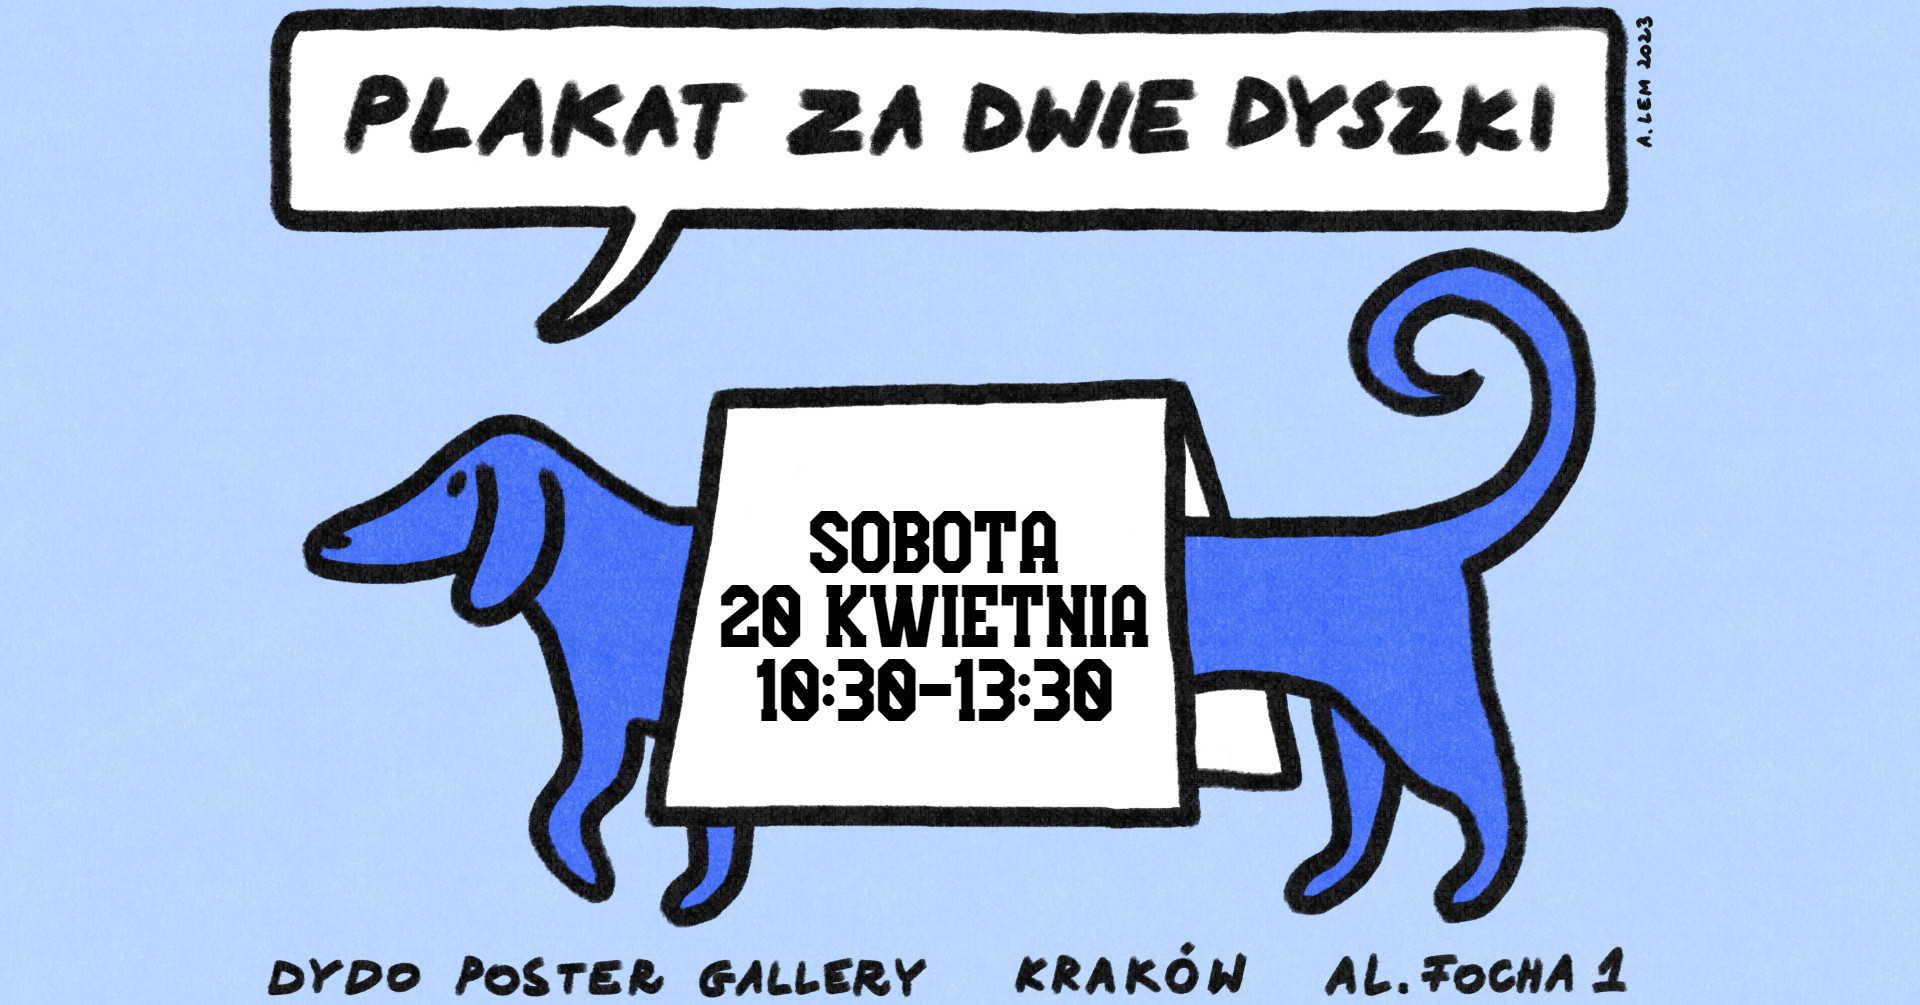 Poster for twenty zloty / 20 April